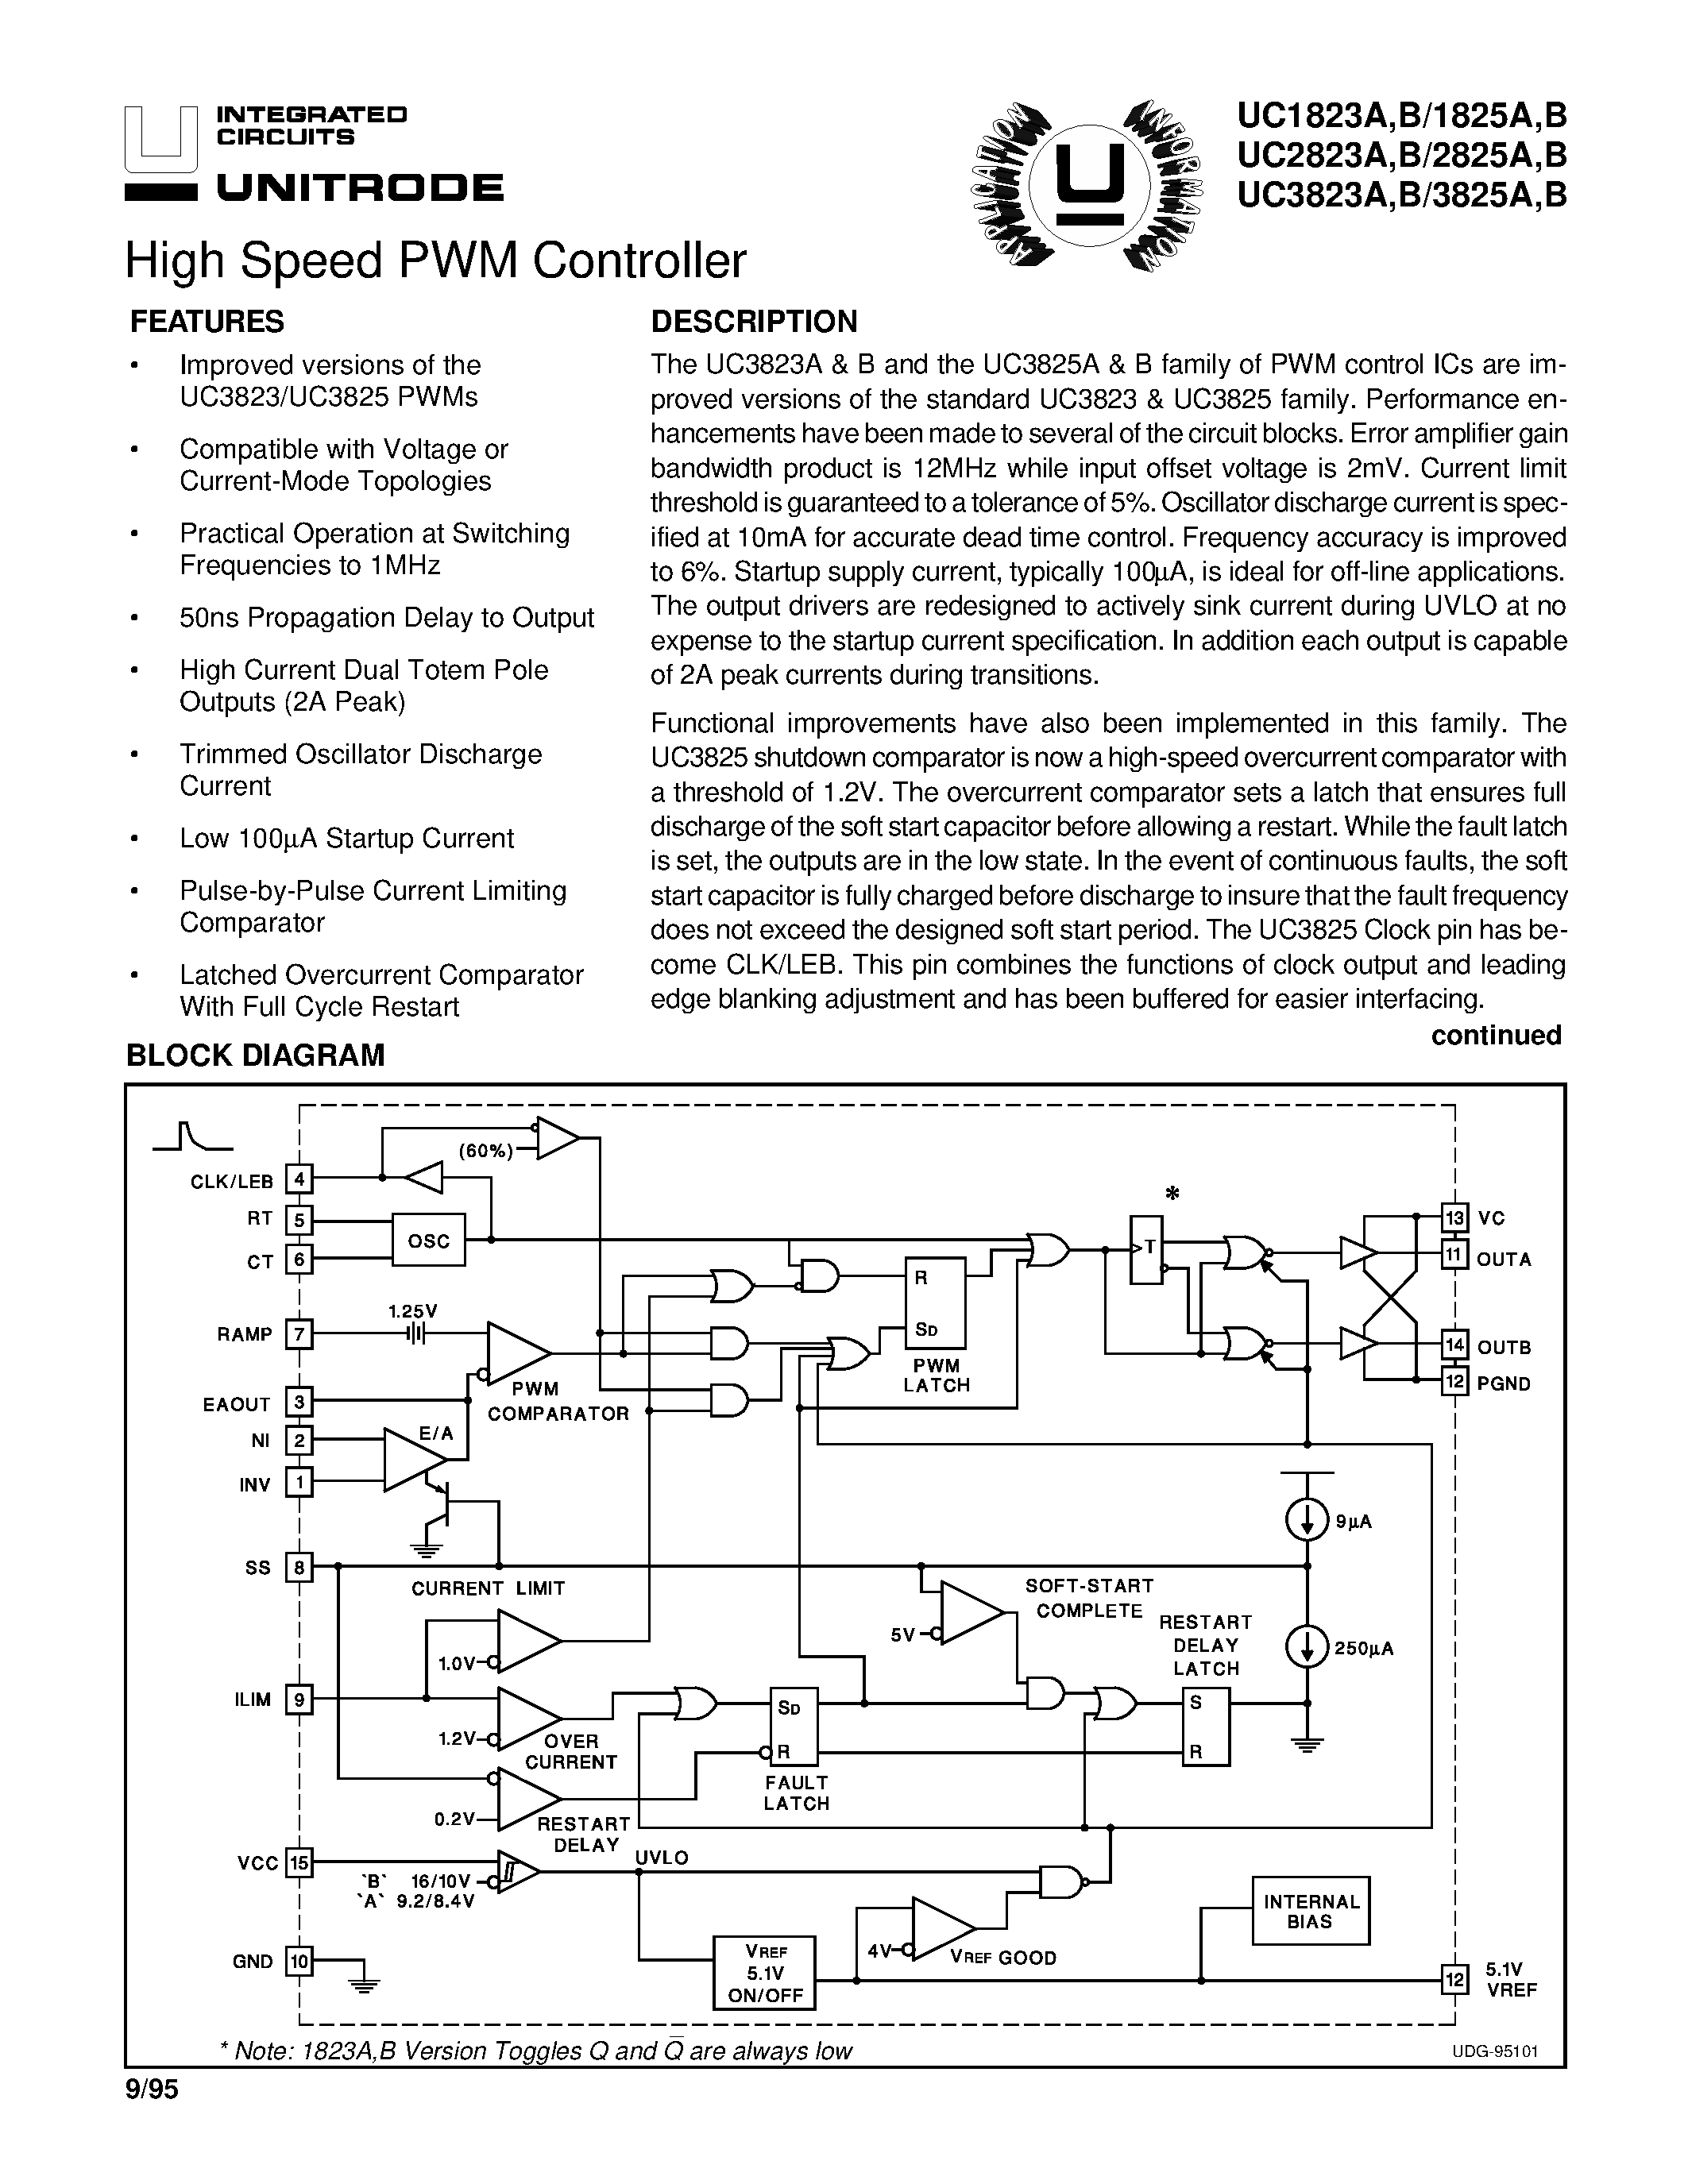 Даташит UC2823B - High Speed PWM Controller страница 1